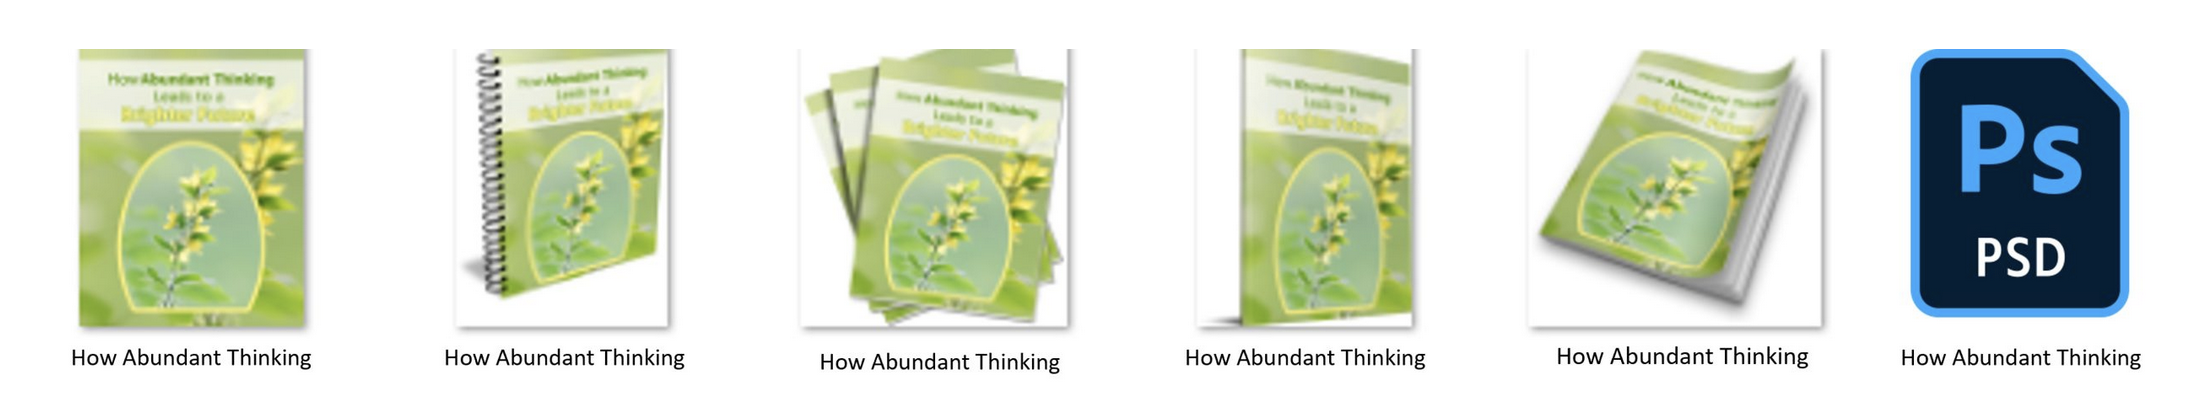 Abundant Thinking PLR Report Cover